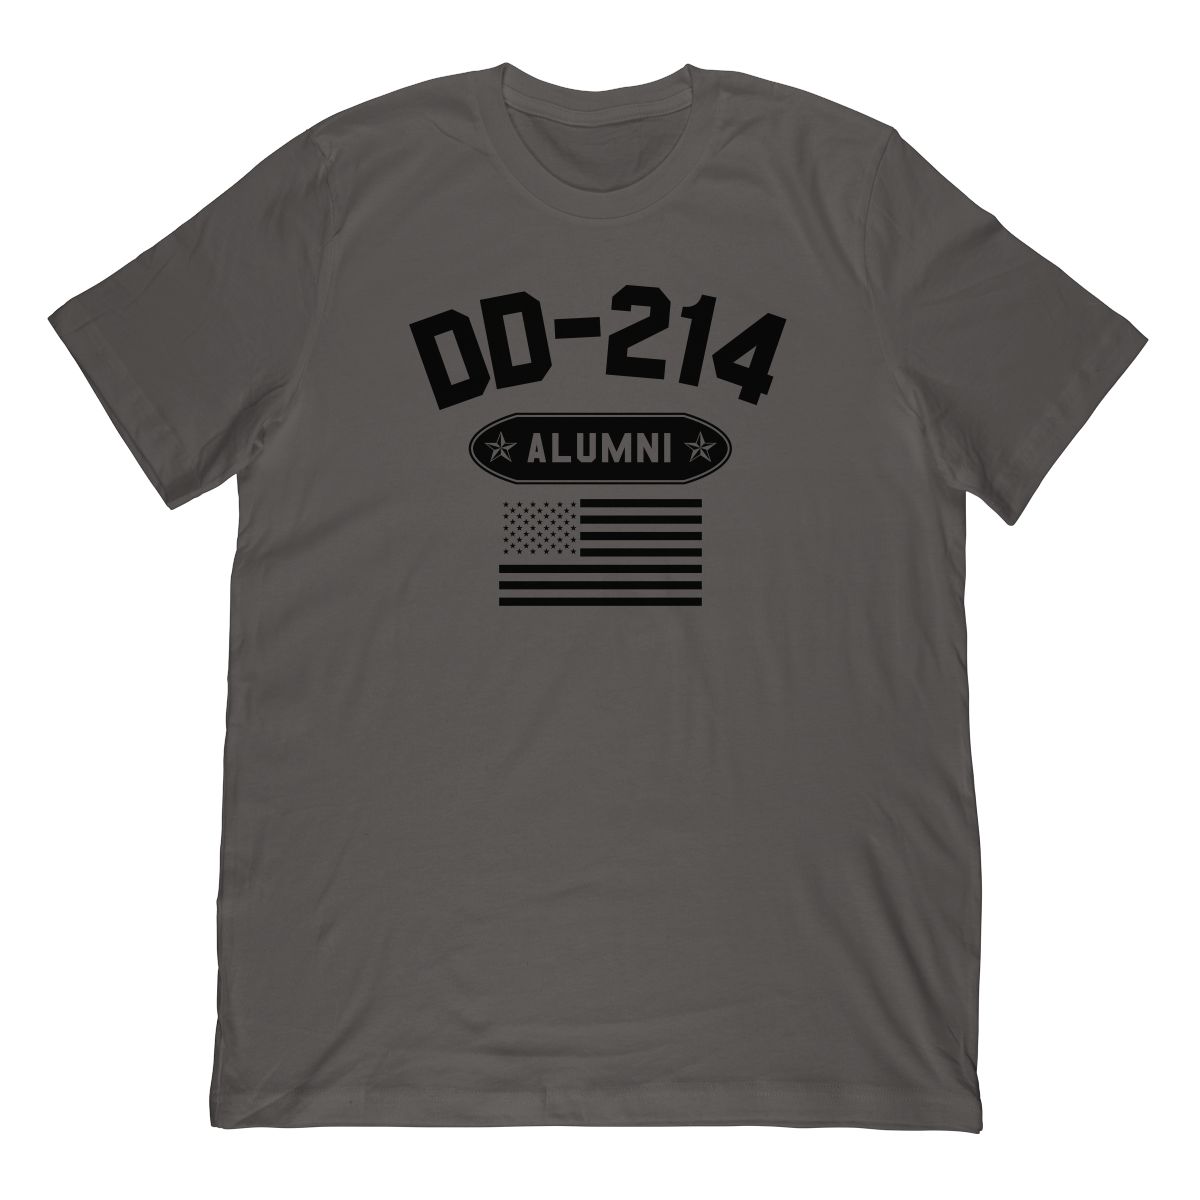 DD-214 Alumni American Flag In Black (Stamp Look) T-Shirt